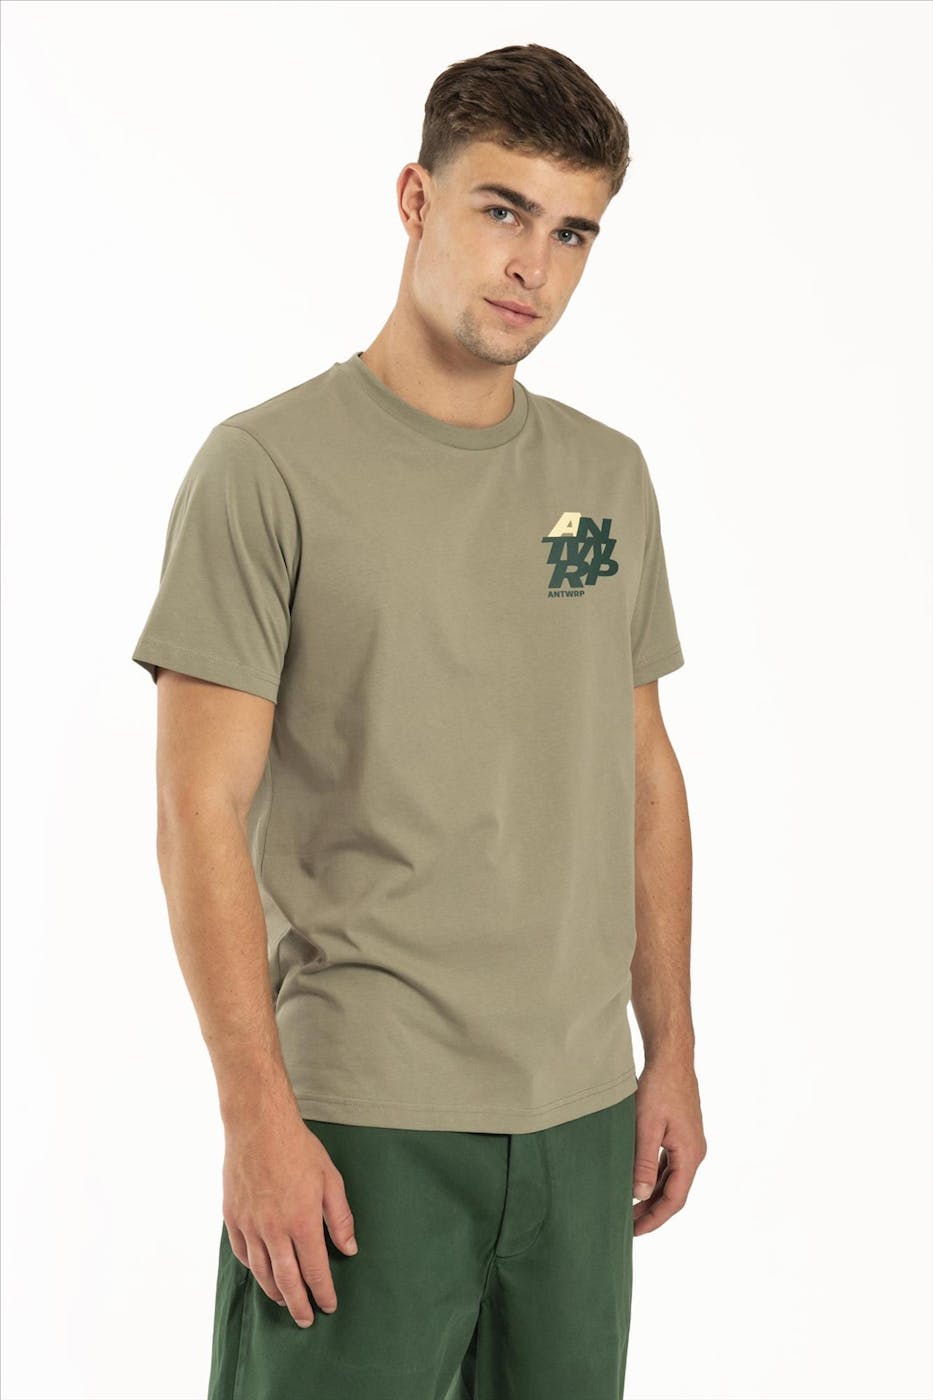 Antwrp - Groene ANTWRP T-shirt